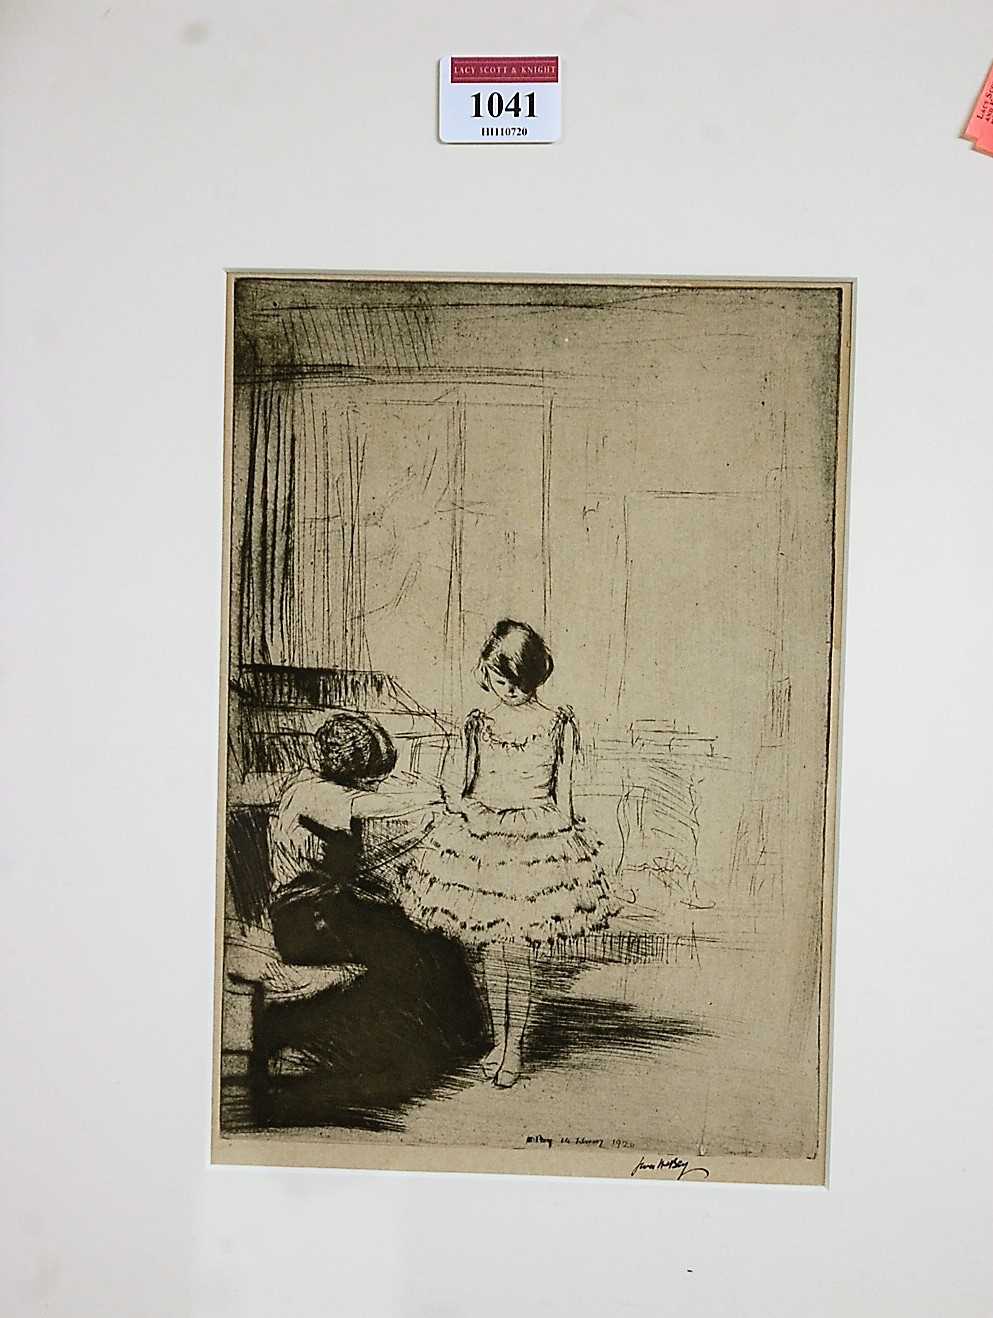 A Young Ballerina, monochrome lithograph, 22 x 16cm